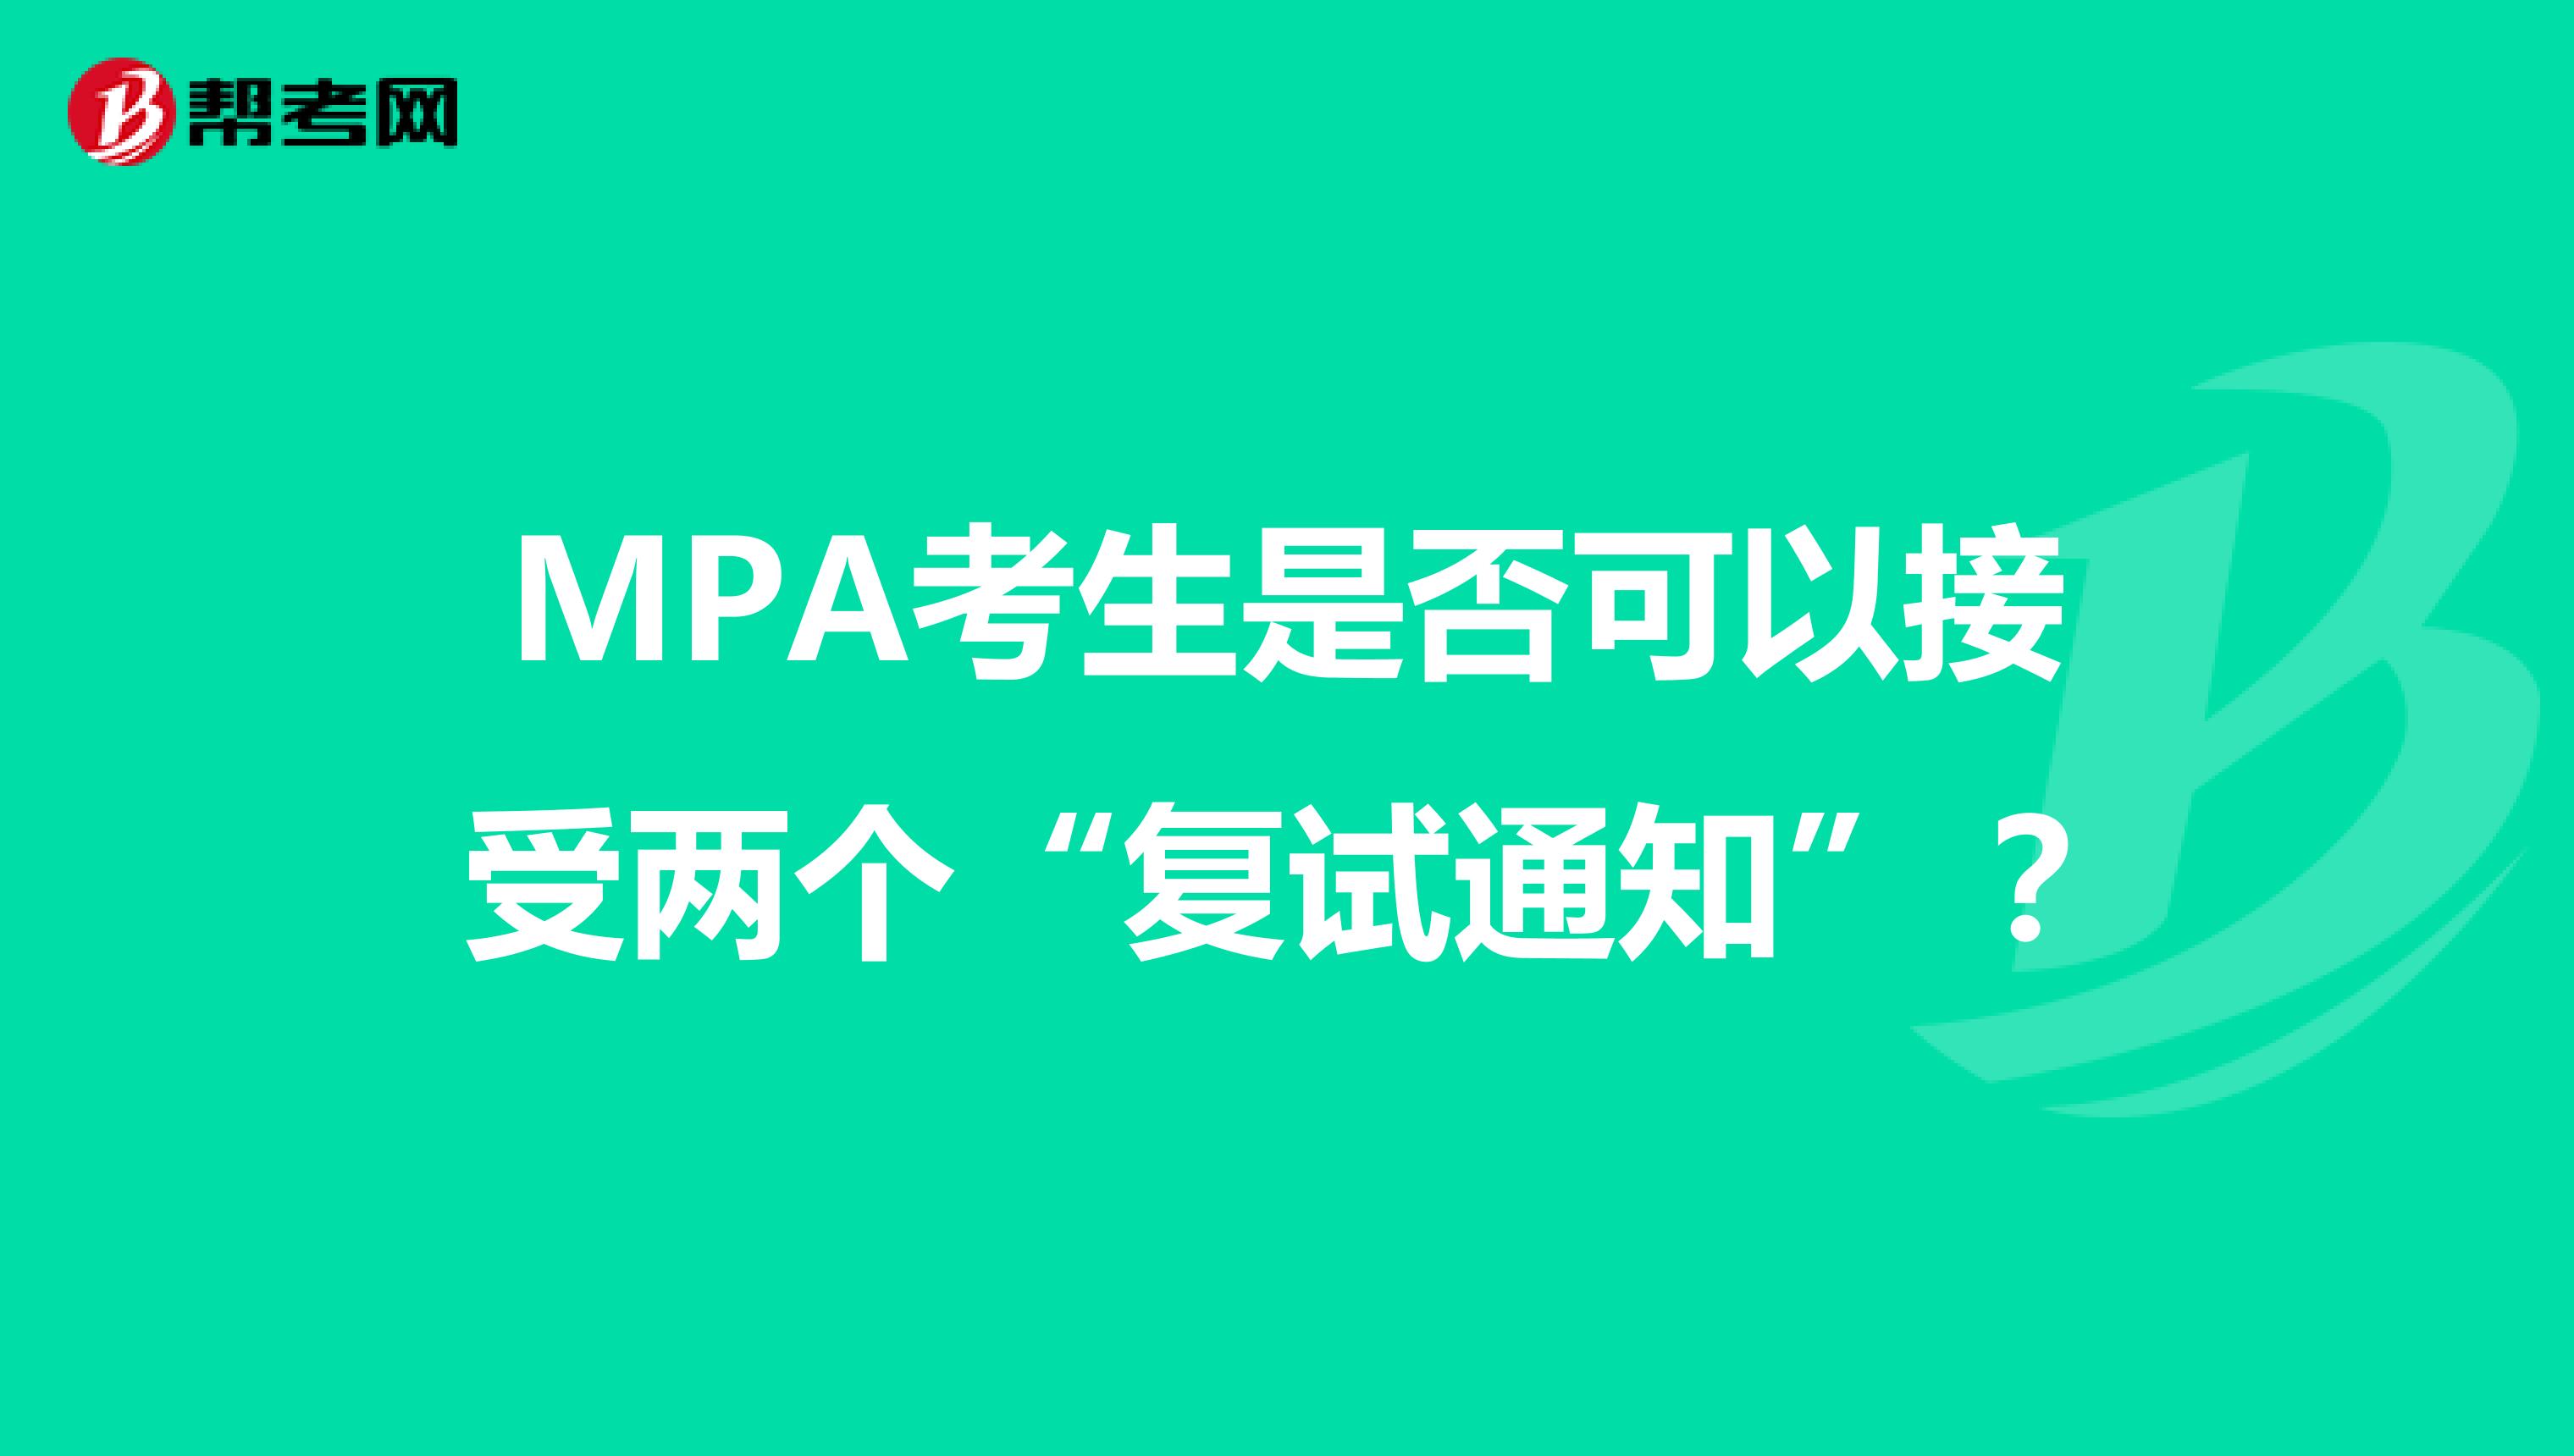 MPA考生是否可以接受两个“复试通知”？